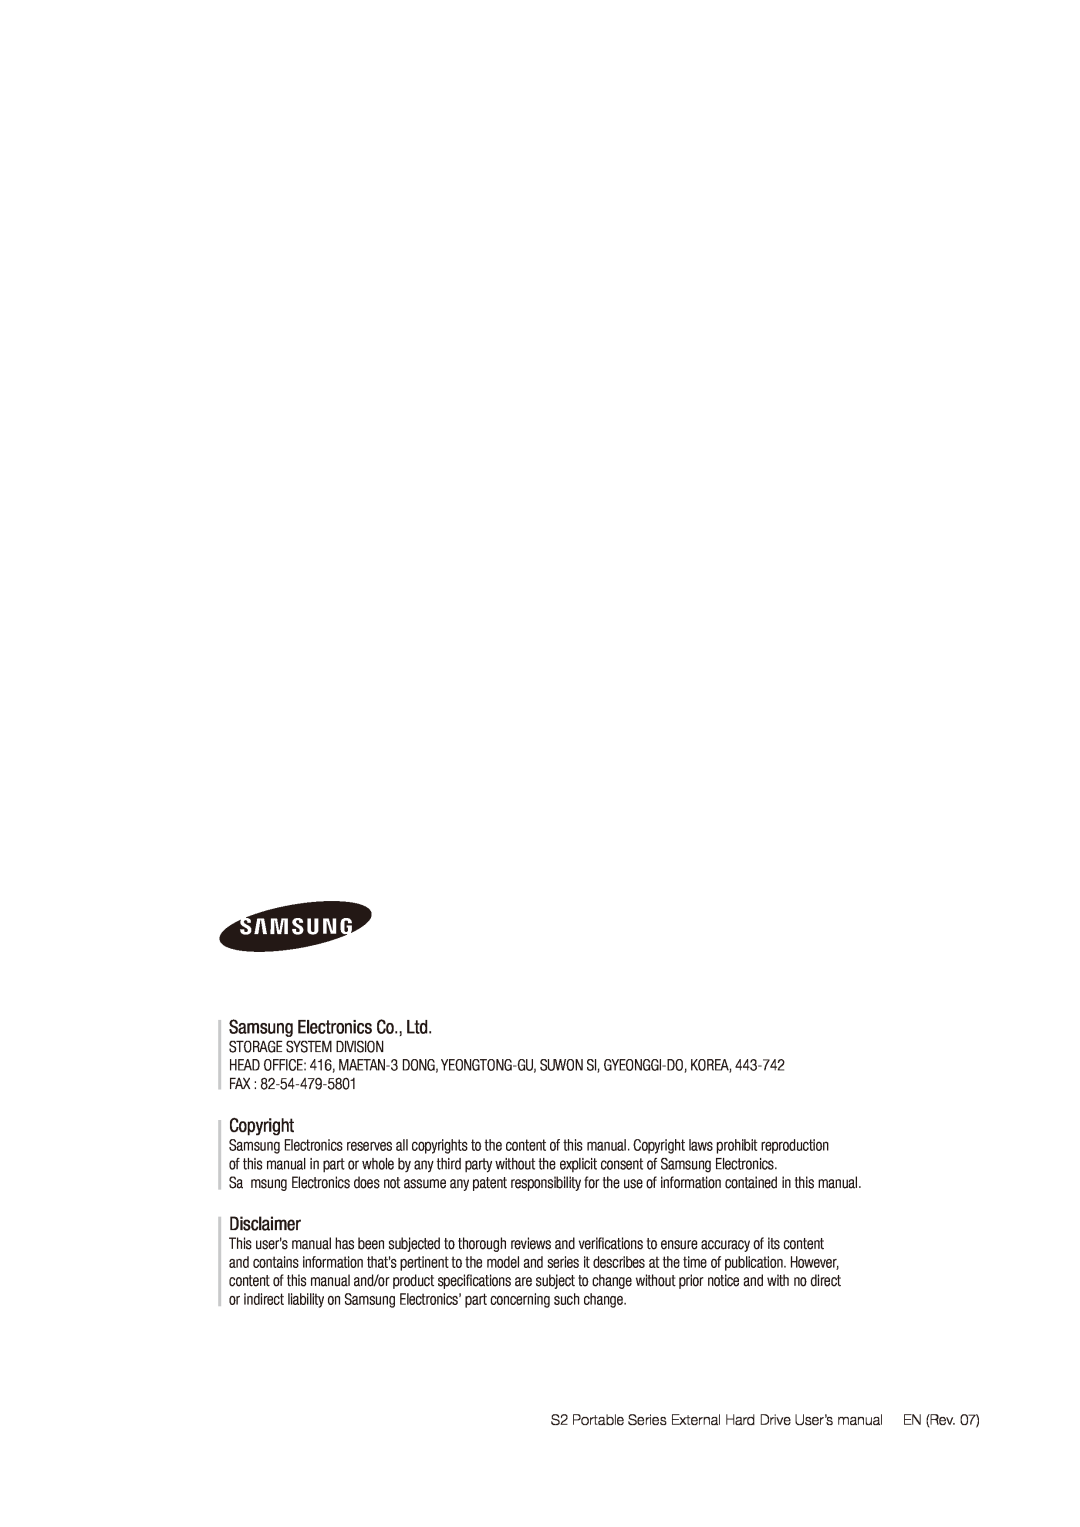 Samsung S2 PORTABLE 3.0, HXMU016DA user manual Copyright, Disclaimer, Storage System Division 